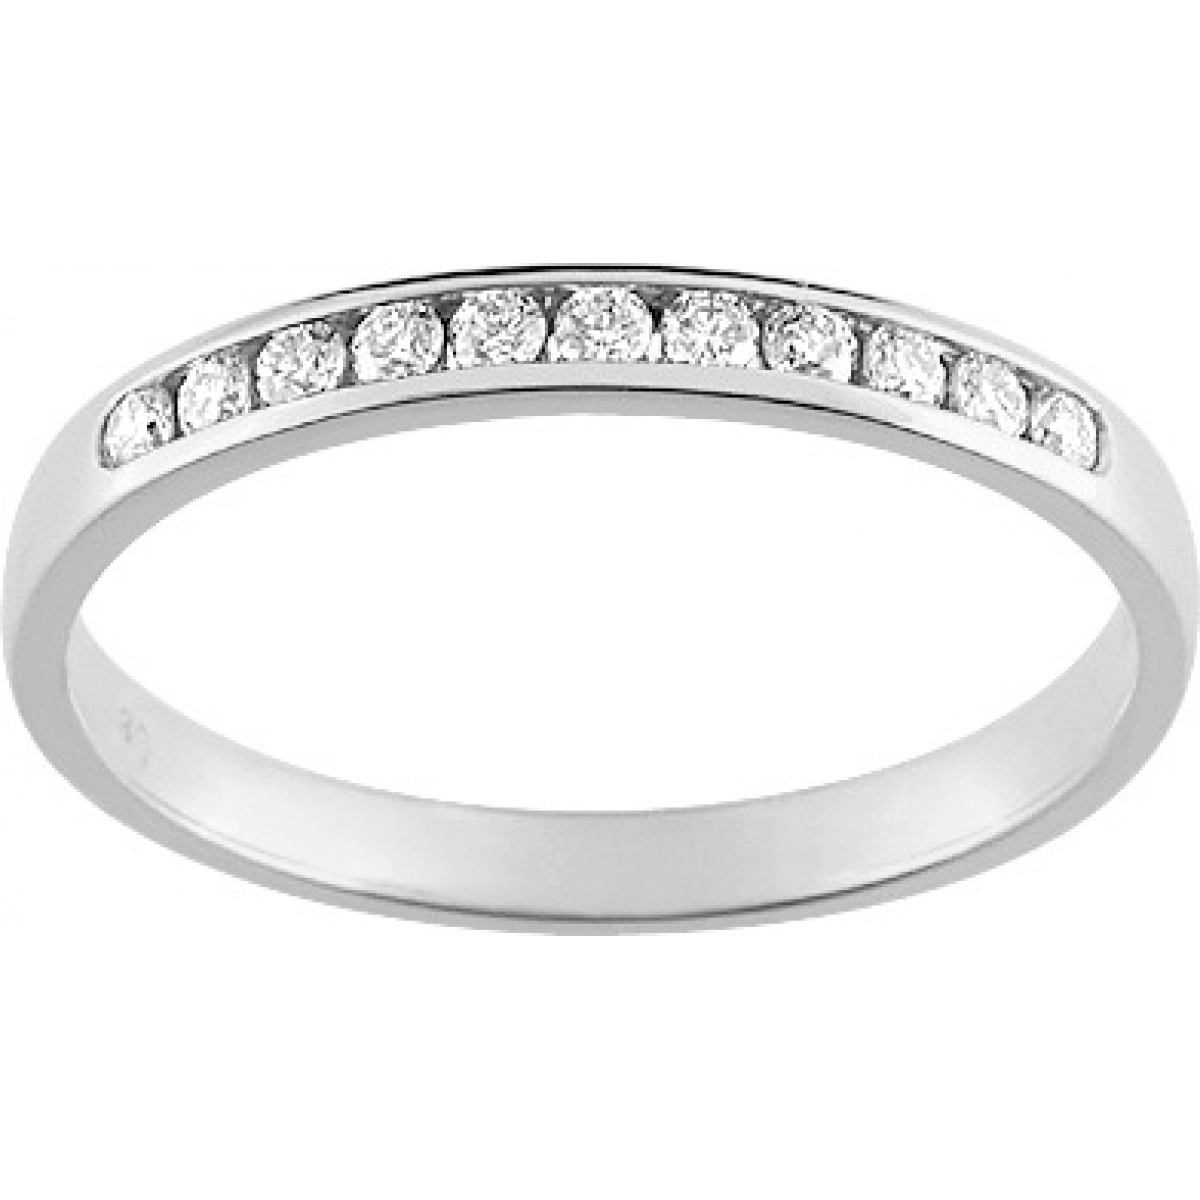 Wedding ring 11 diam 0.15ct 18K WG Lua Blanca  4N368MI0 - Size 57